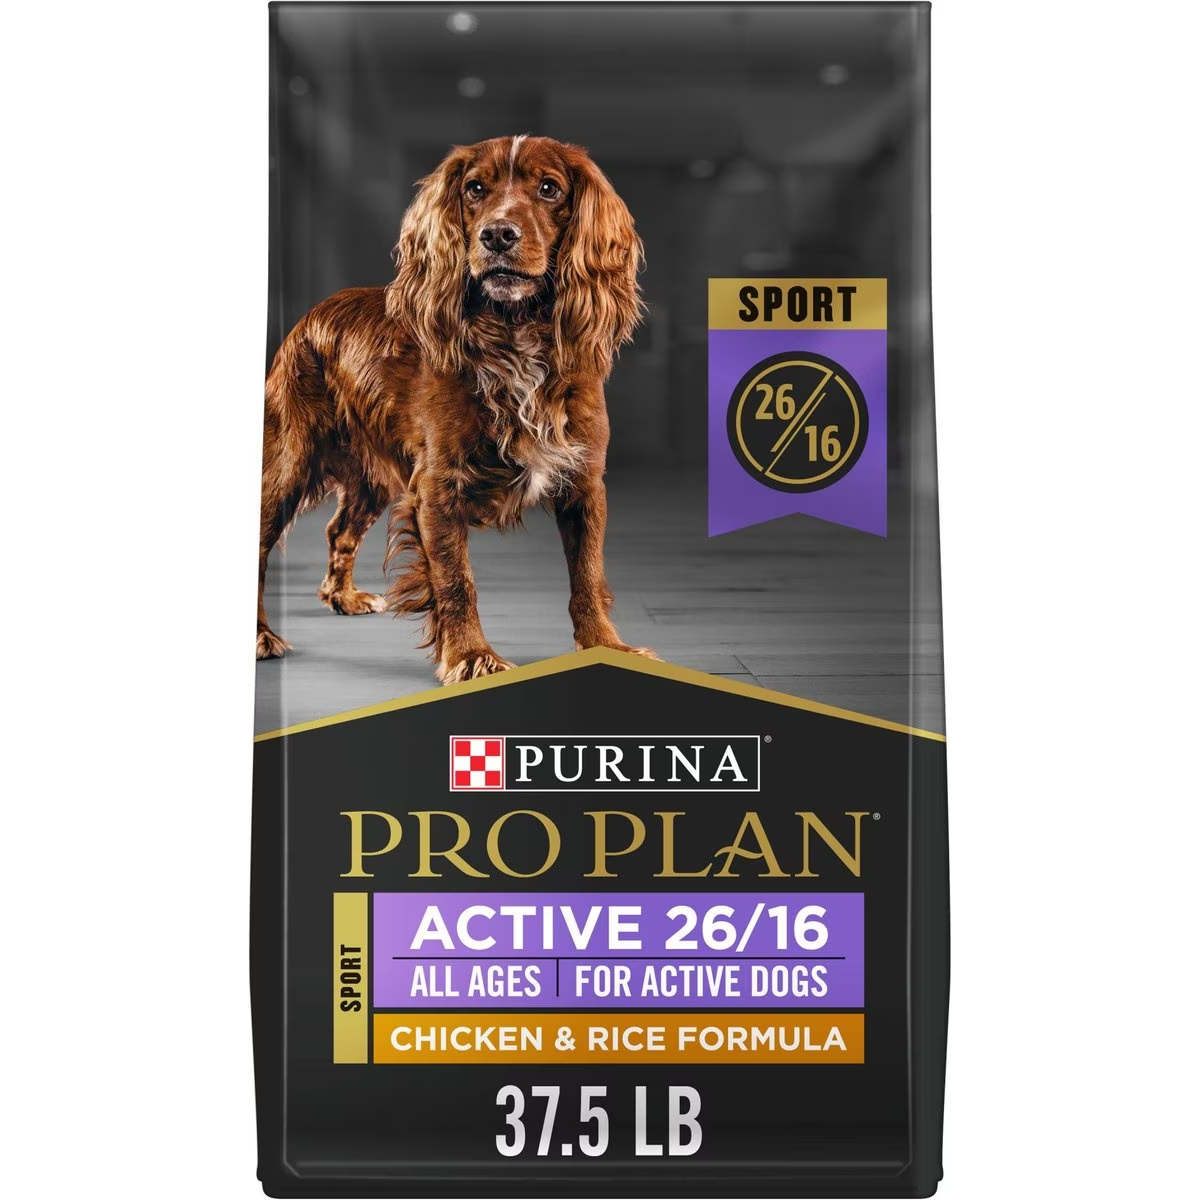 Purina Pro Plan Sport Dog Food